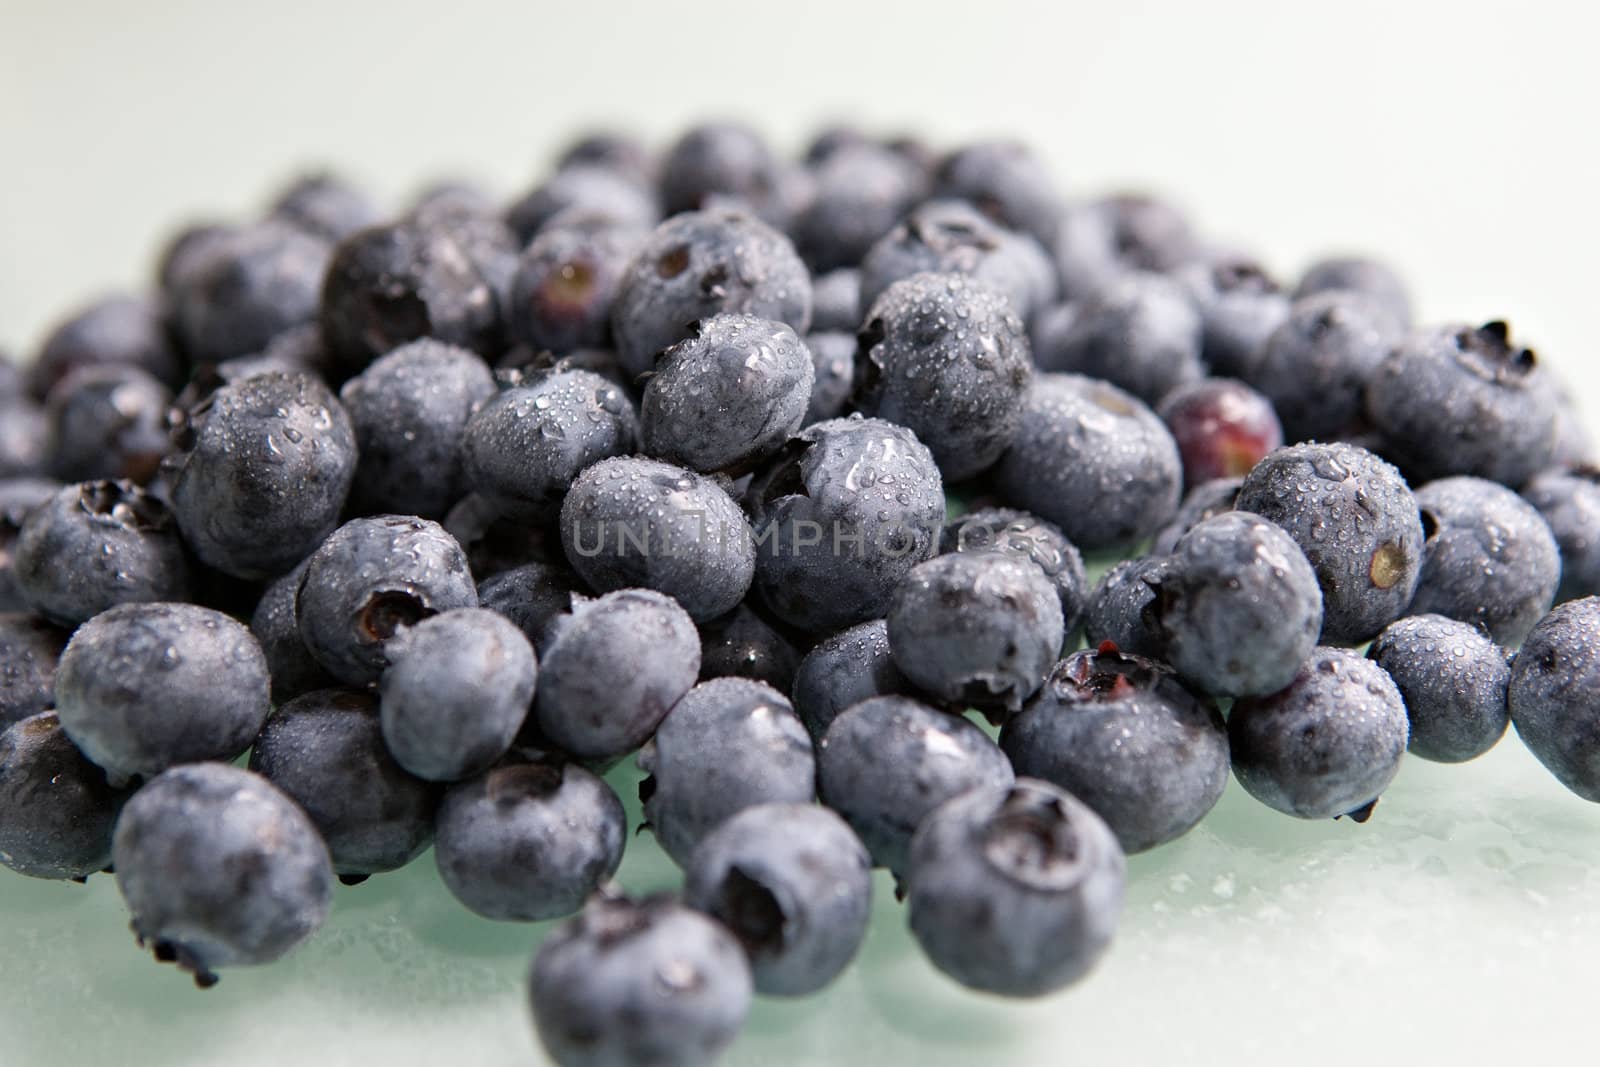 Bunch of fresh, misty blueberries